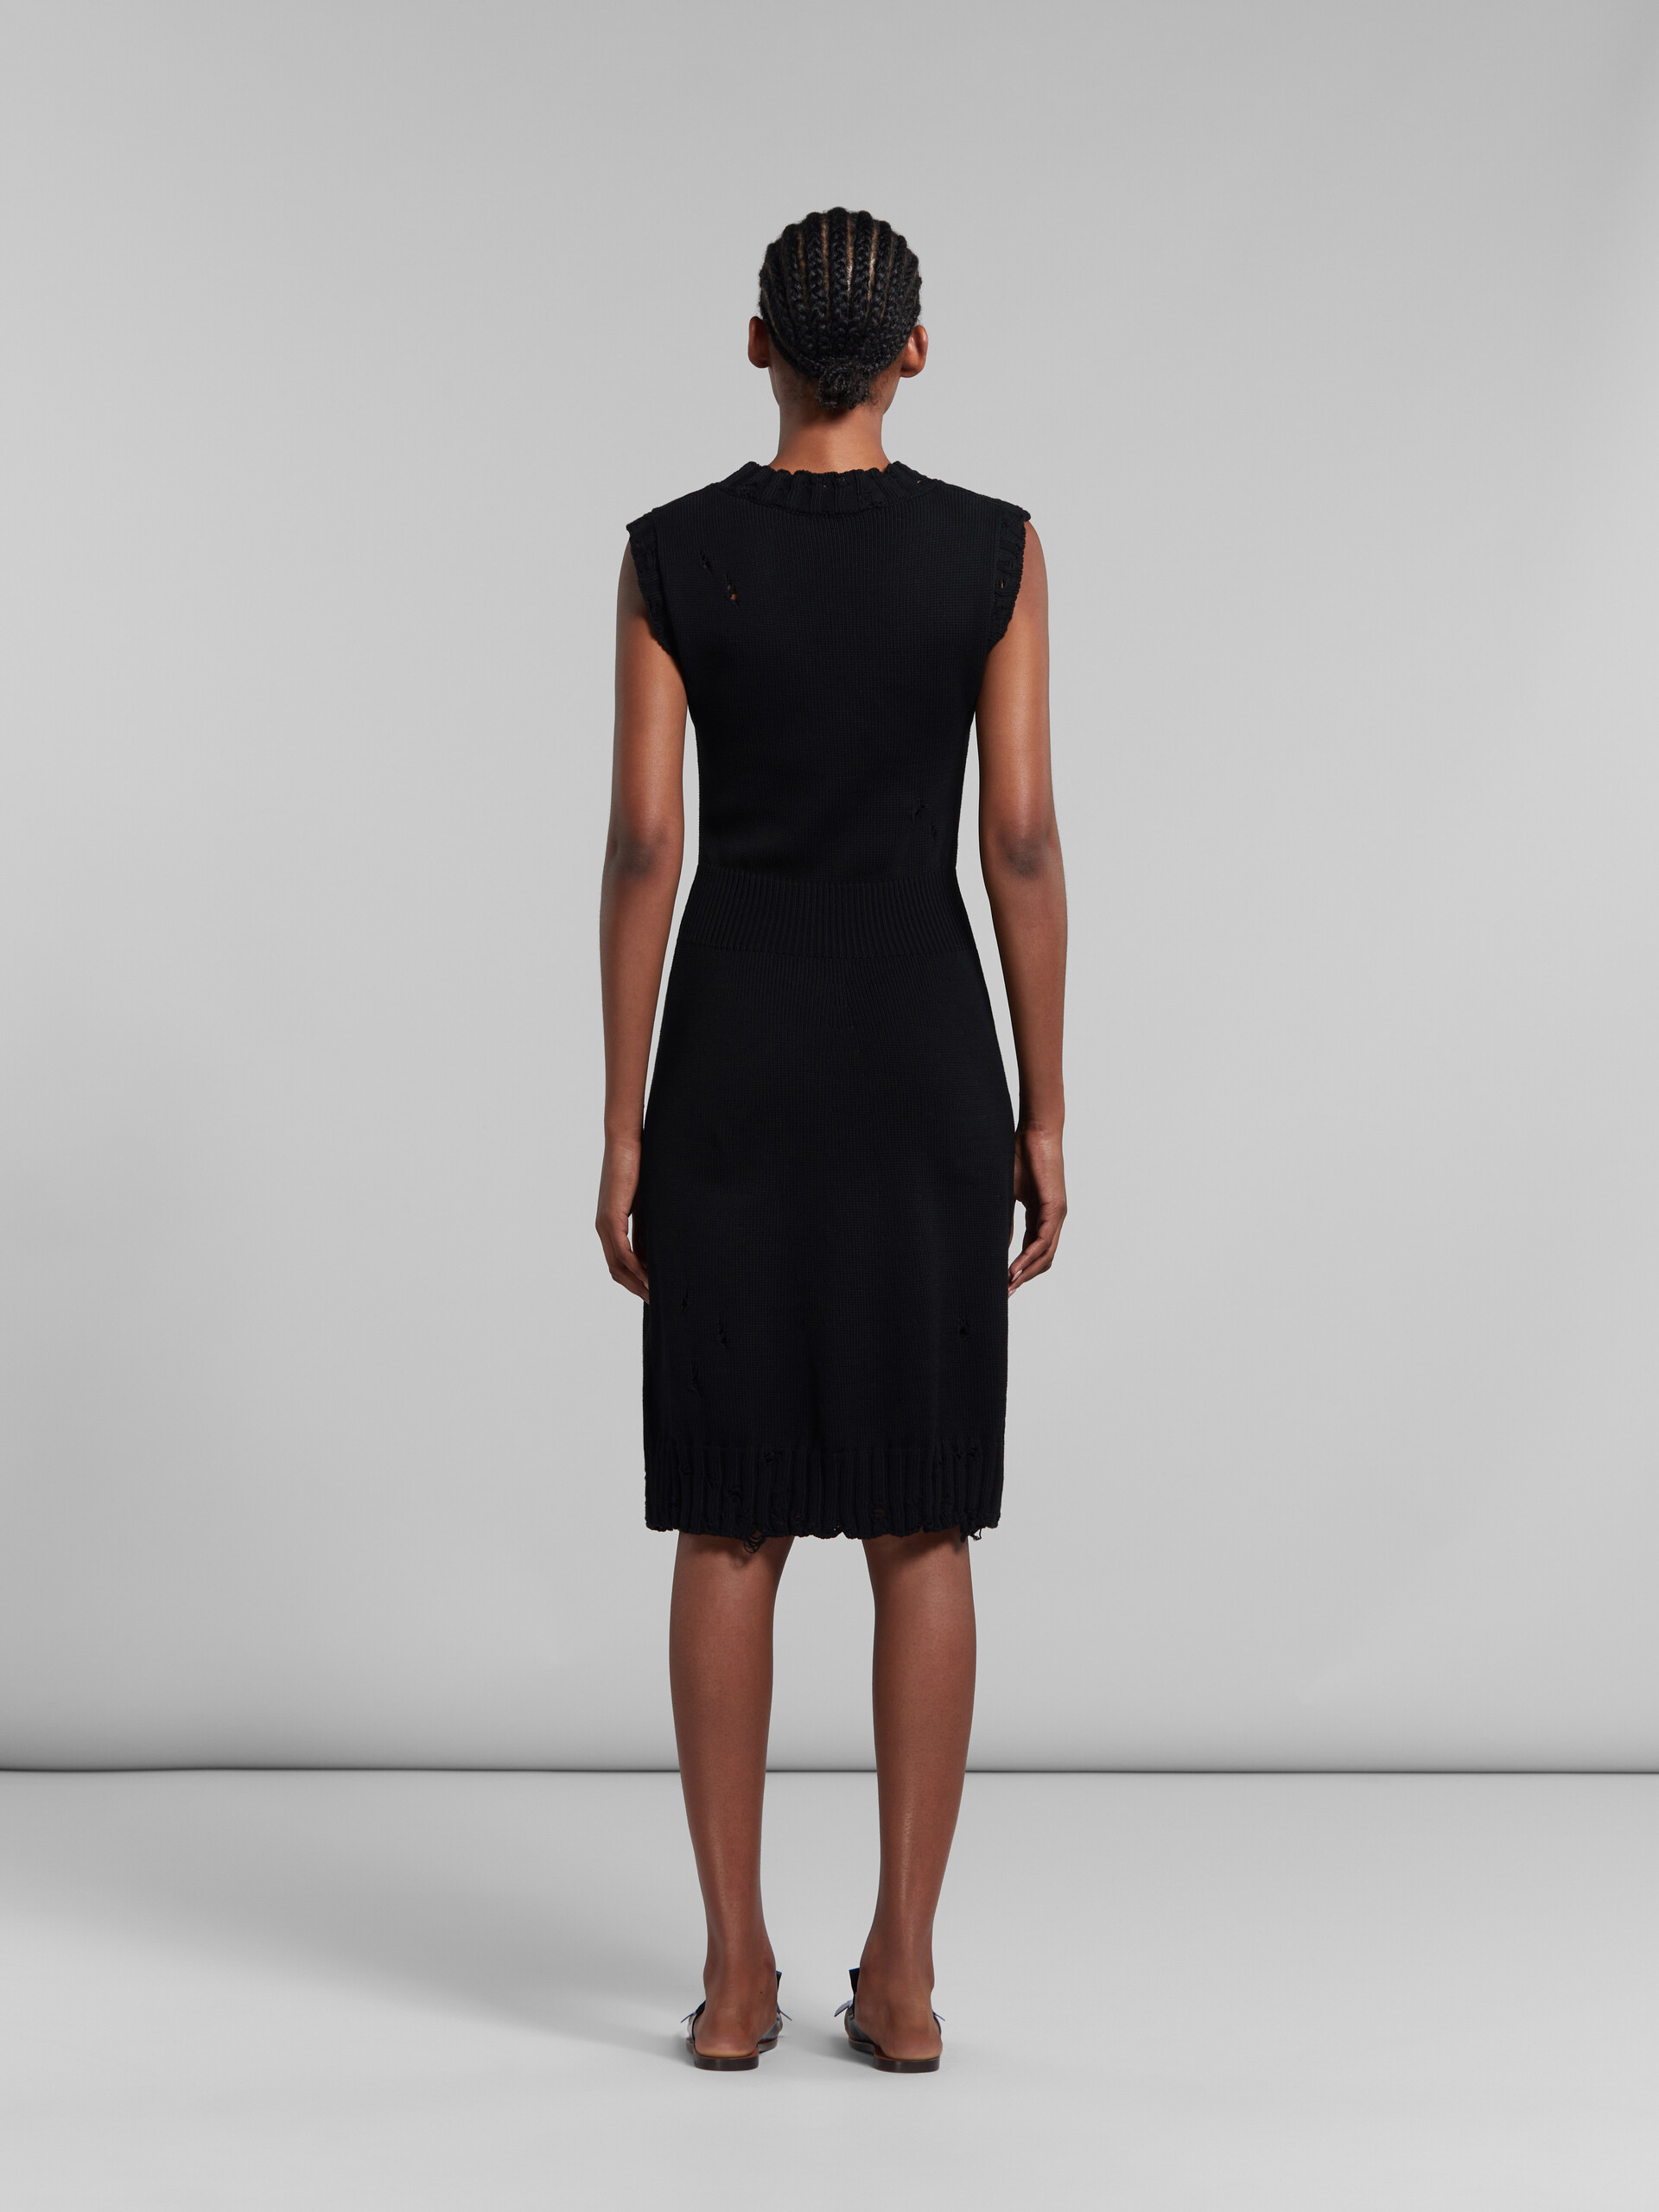 Black dishevelled cotton knitted dress - Dresses - Image 3